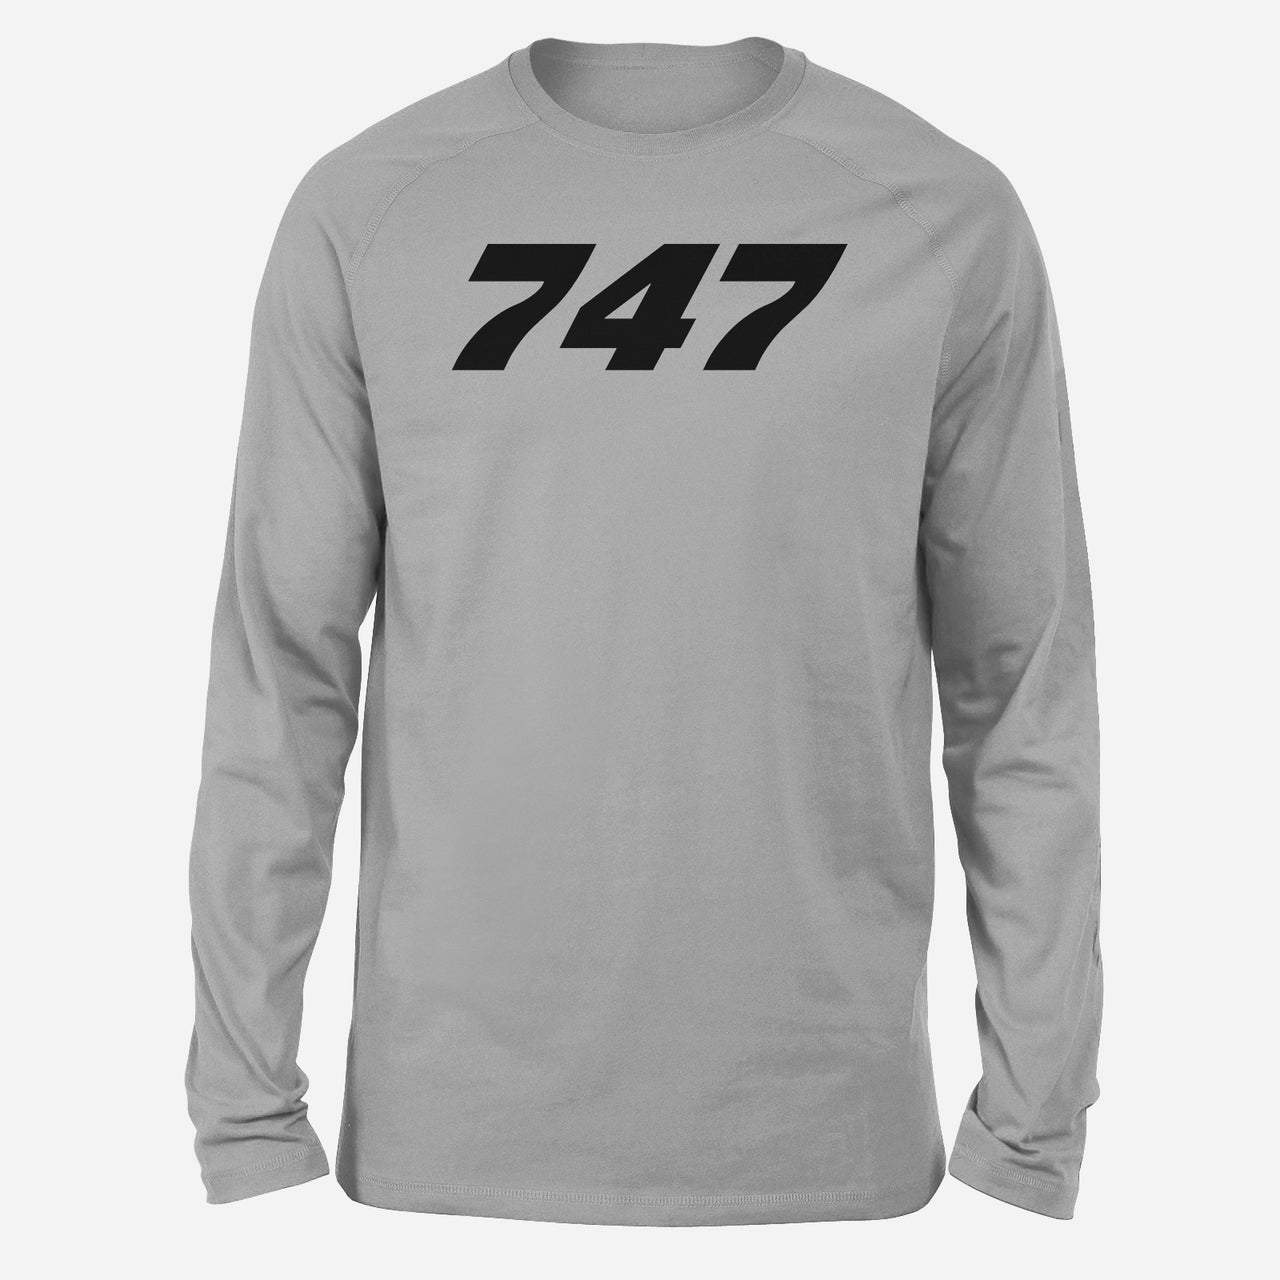 747 Flat Text Designed Long-Sleeve T-Shirts